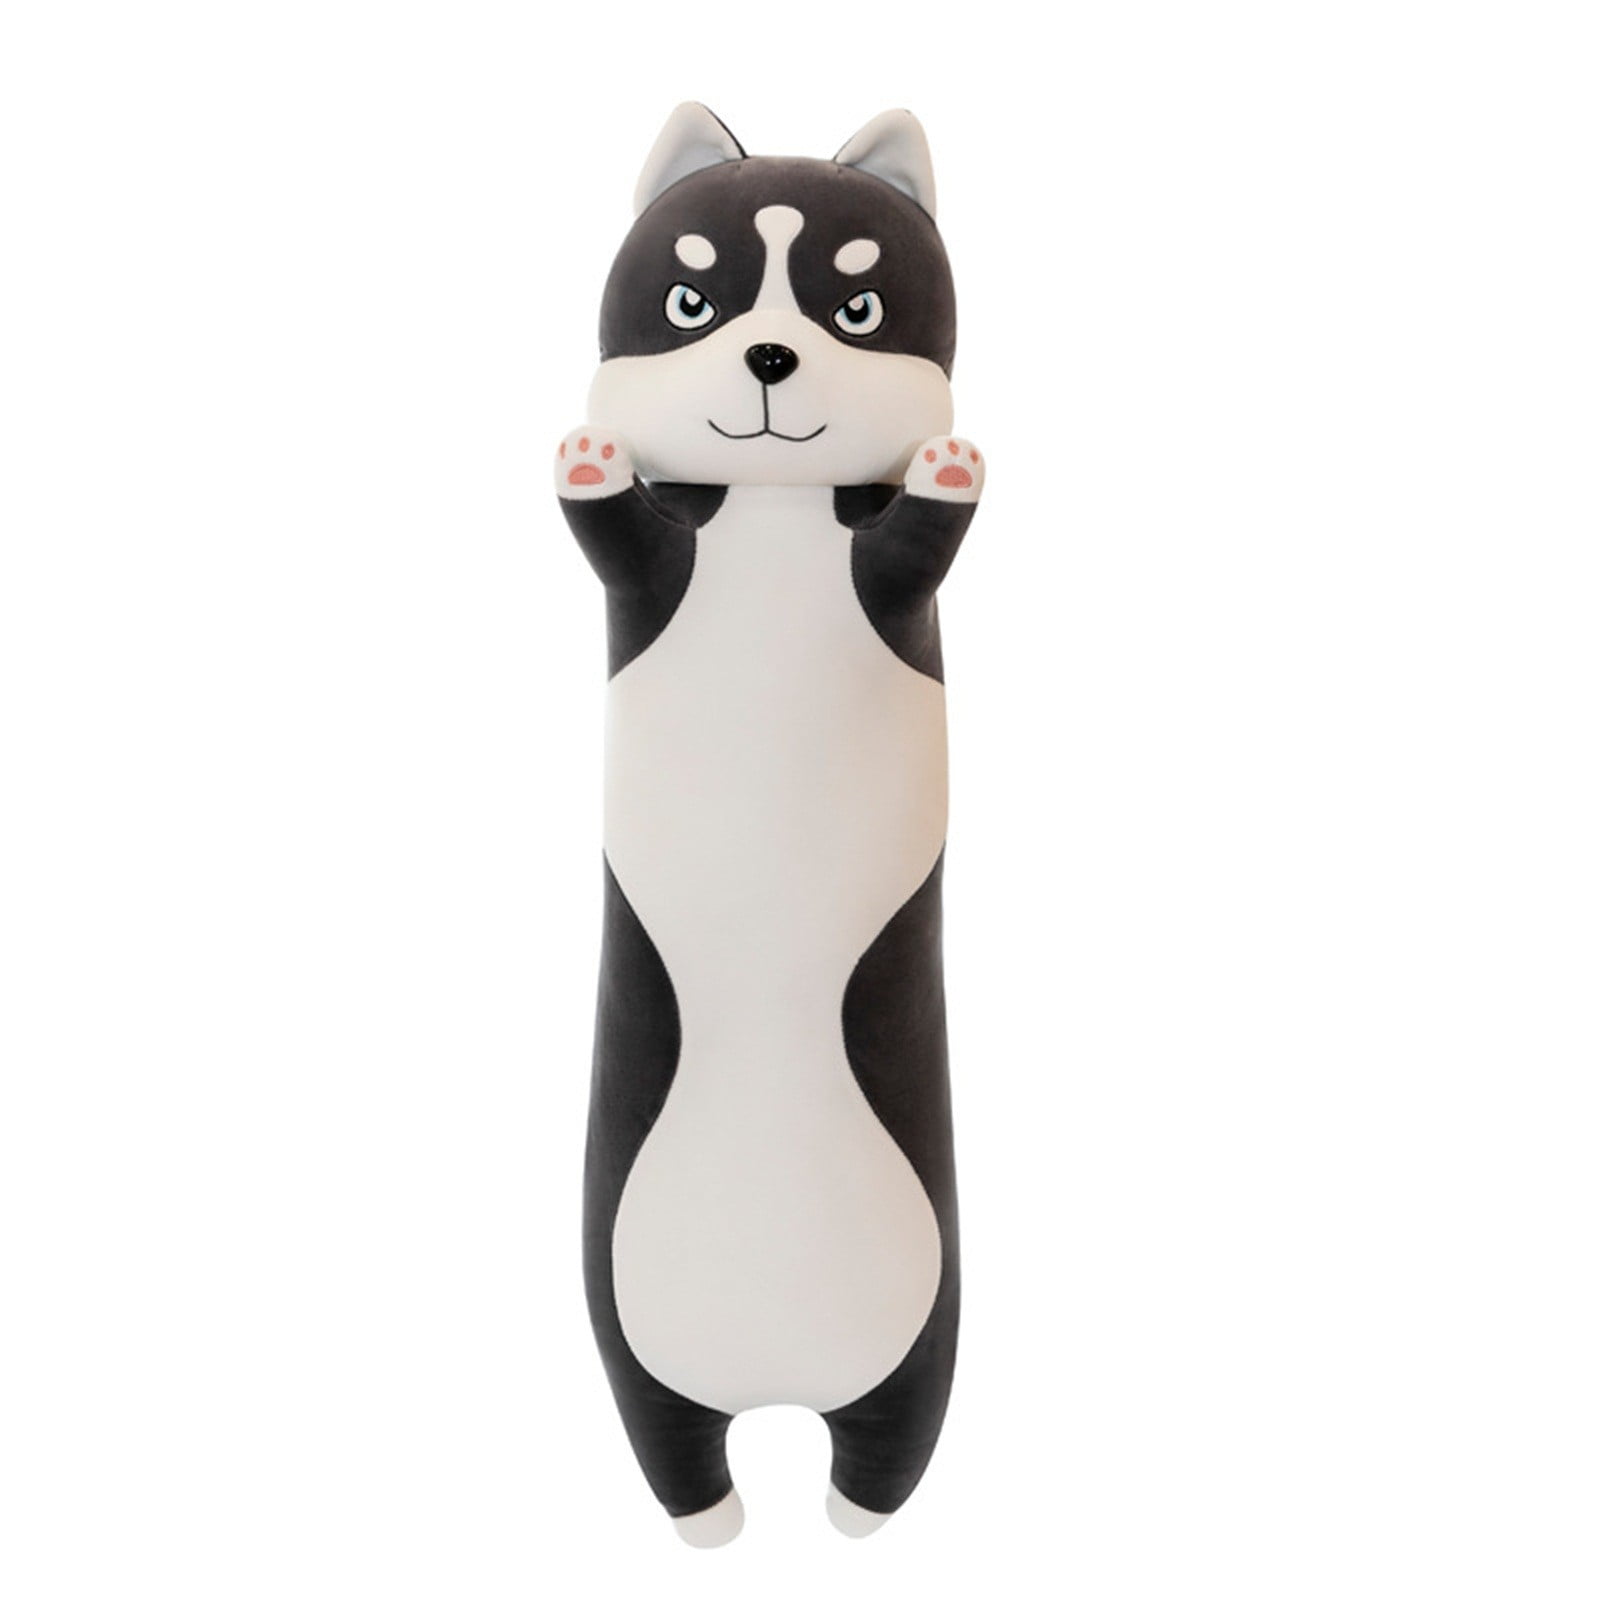 70CM Big Dog Husky Stuffed Animal Pillow Plush Soft Toys Doll Gift Birthday Gift